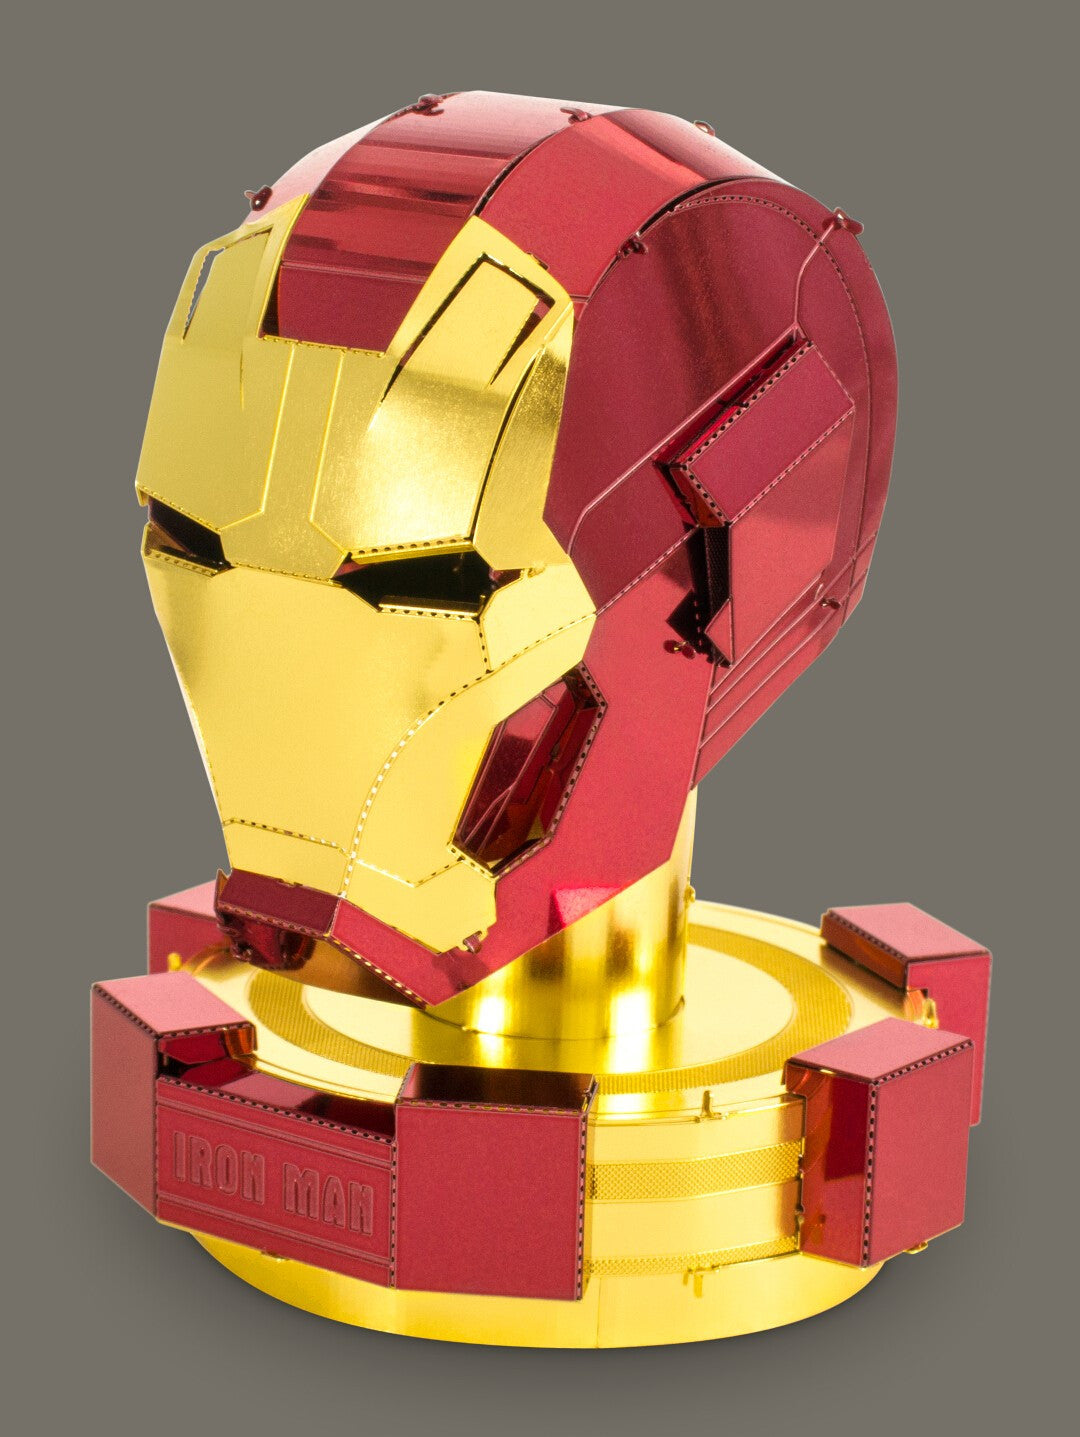 Metal Earth: Iron Man Helmet